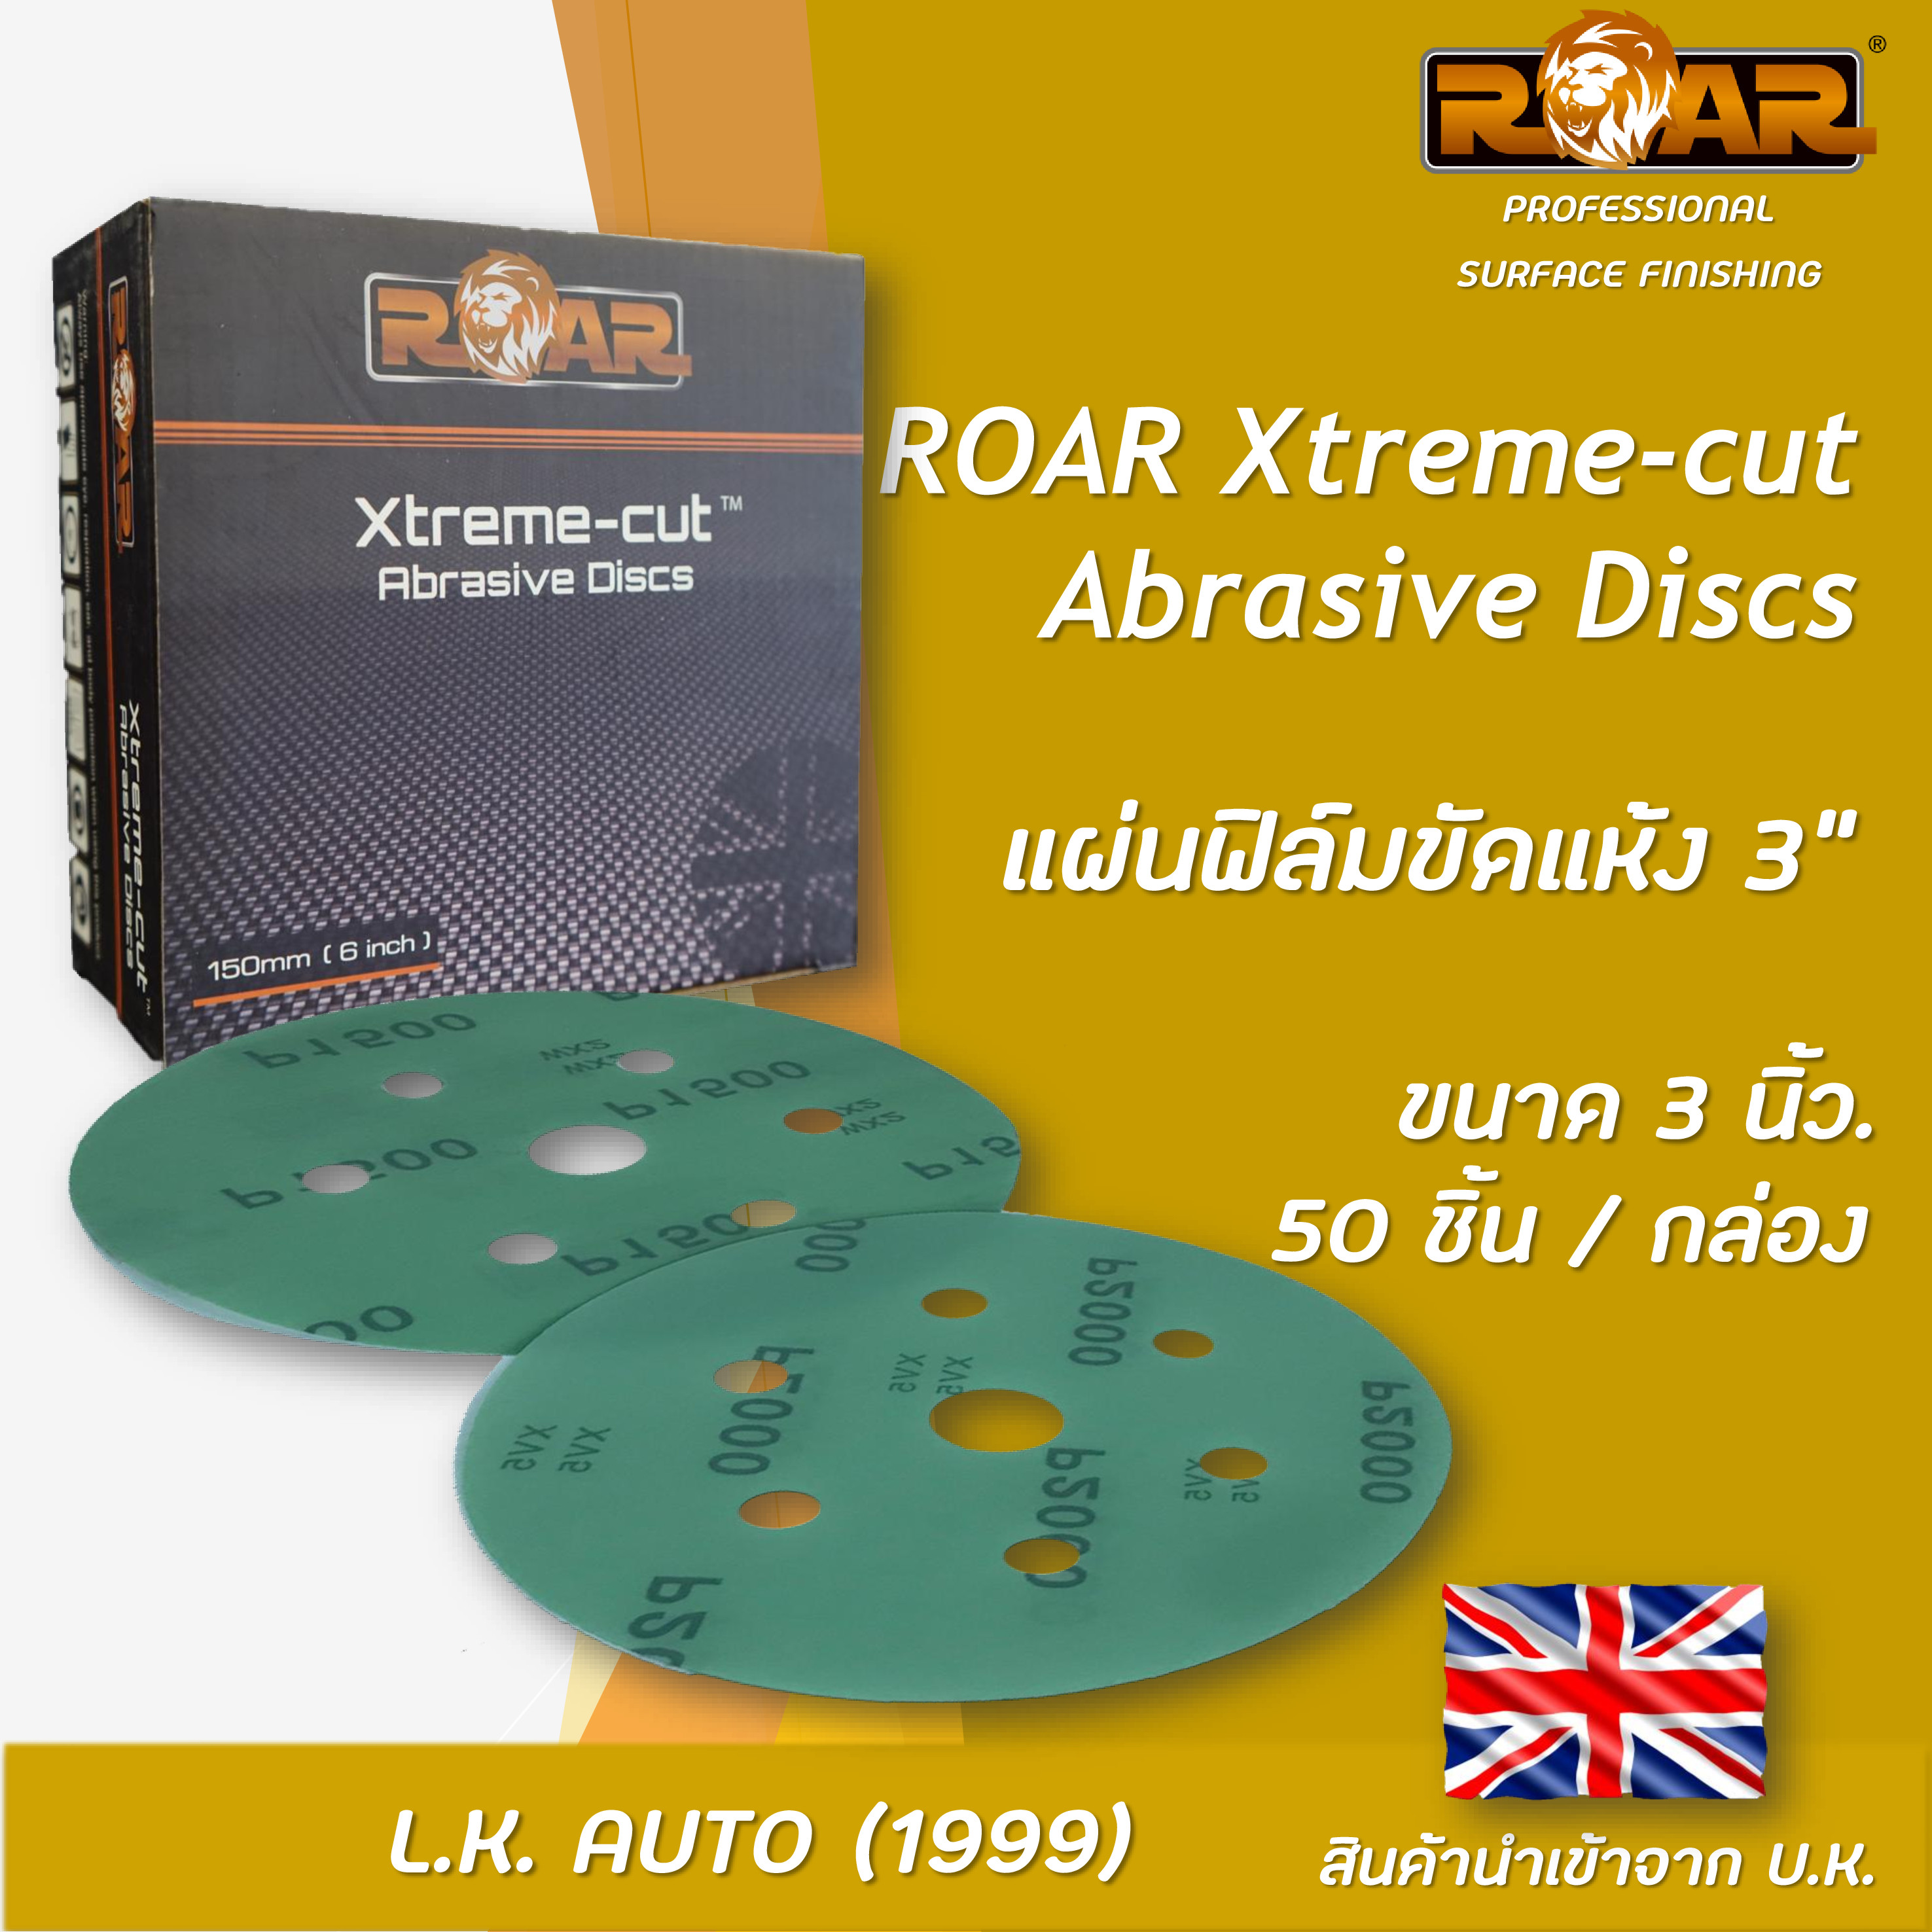 ROAR Xtreme-cut Abrasive Discs 3"